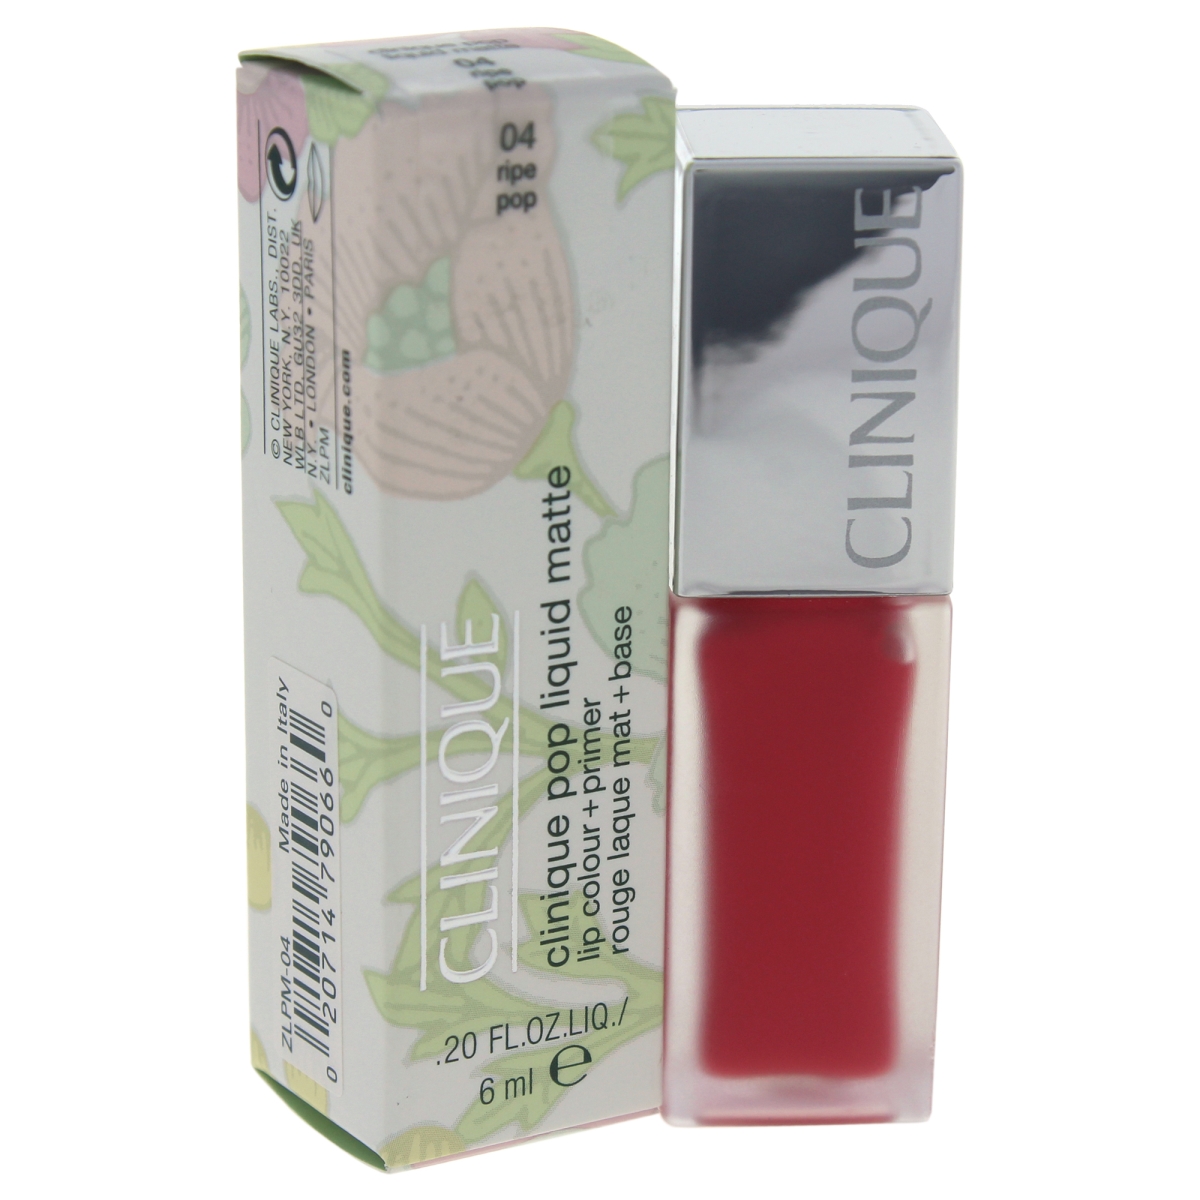 W-c-11081 0.2 Oz No. 04 Ripe-pop Liquid Matte Plus Primer Lip Gloss For Women